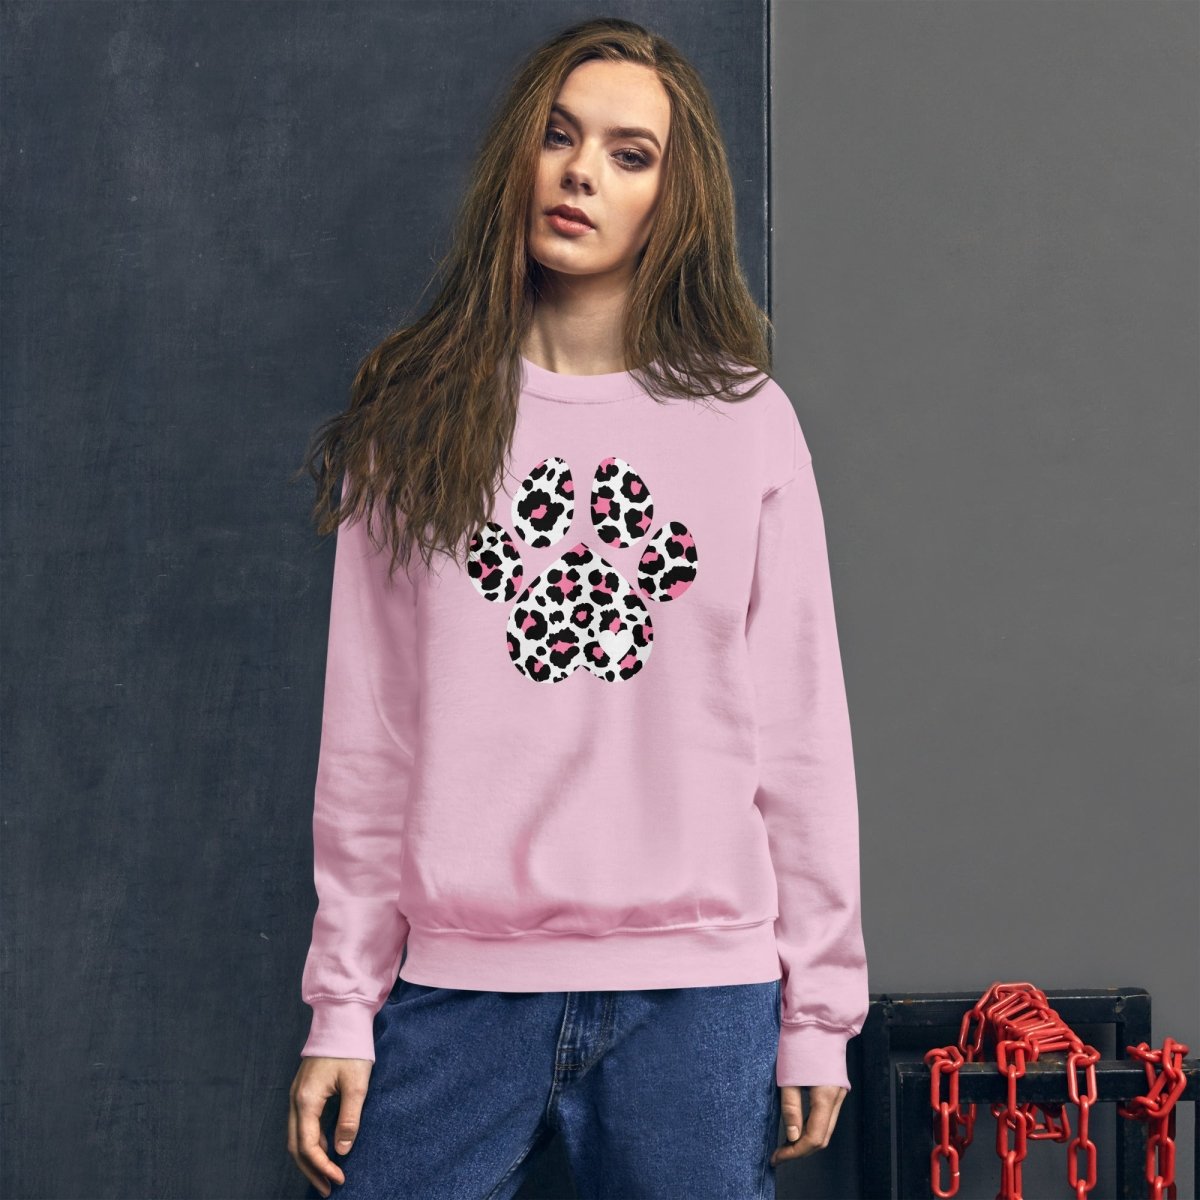 Pink and Black Leopard Print Dog Paw Sweatshirt - DoggyLoveandMore